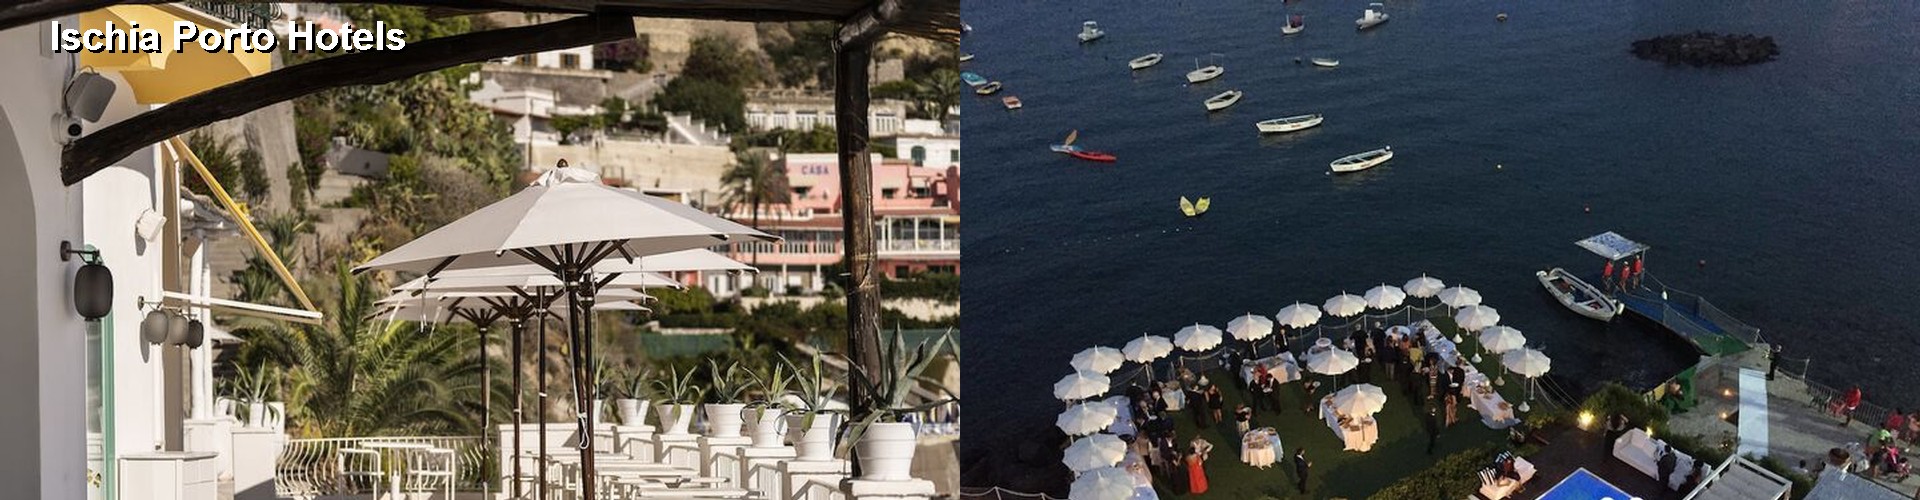 5 Best Hotels near Ischia Porto